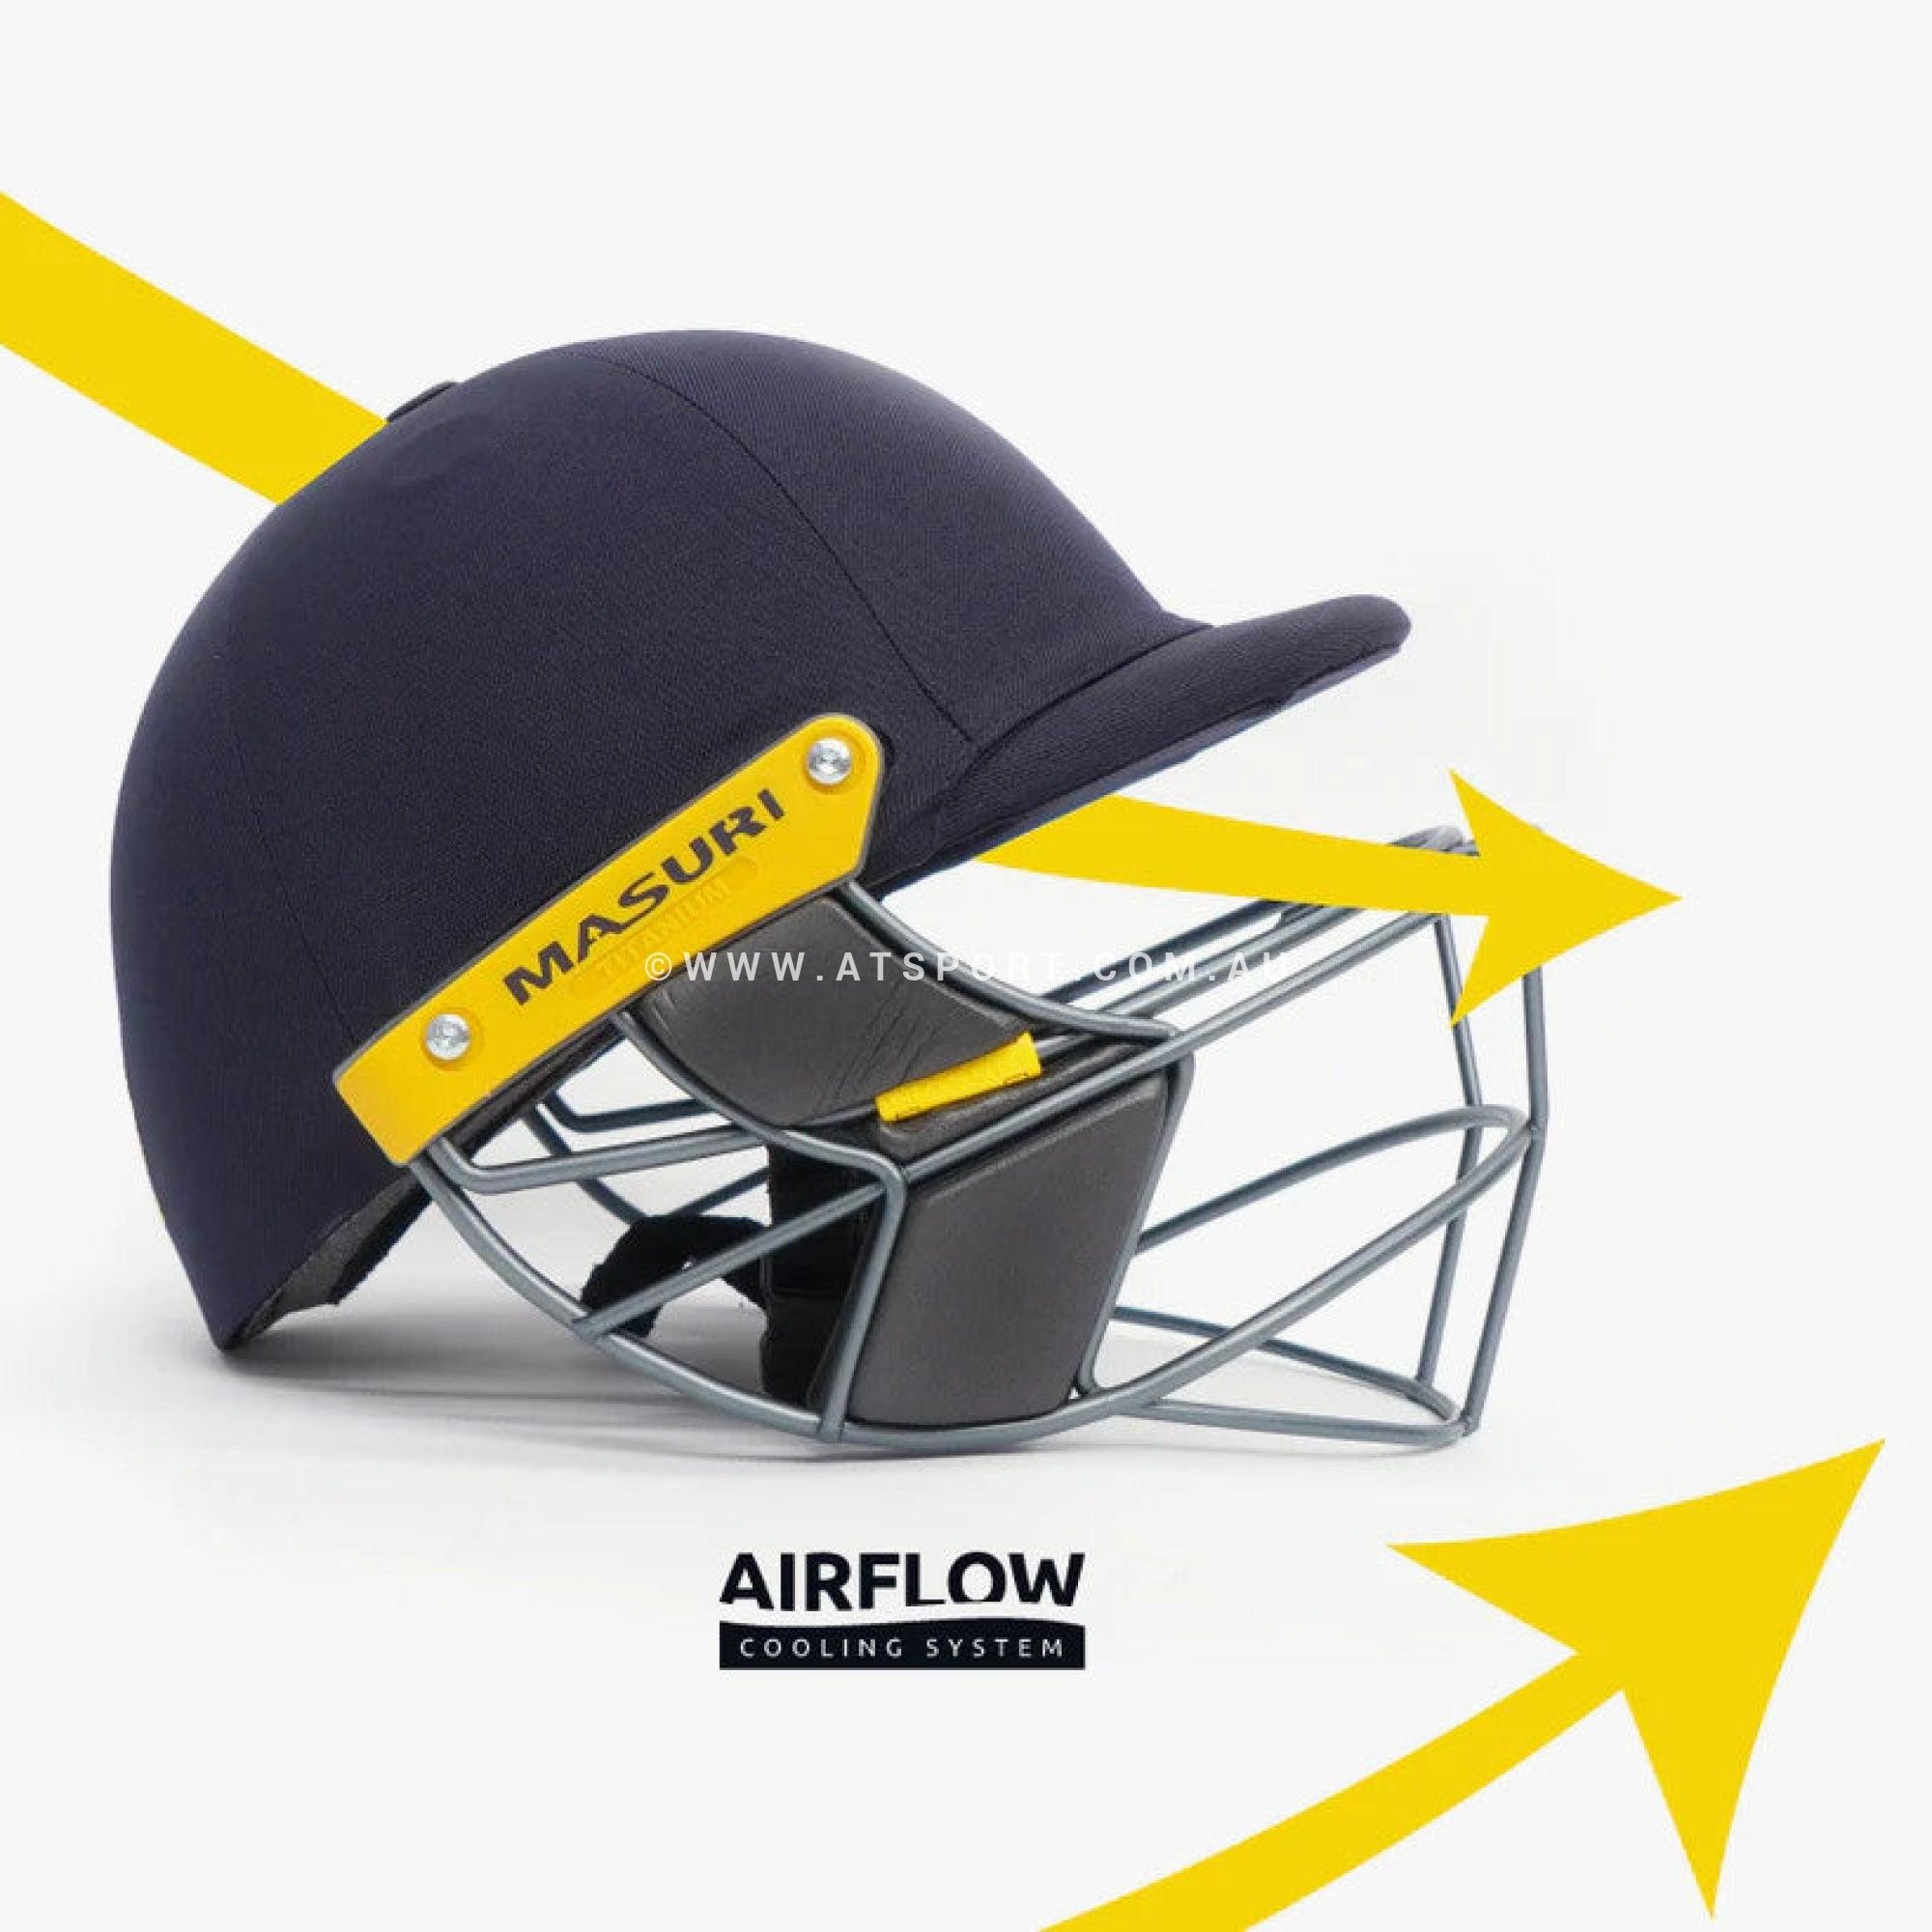 Masuri E LINE STEEL Grille Cricket Helmet - AT Sports